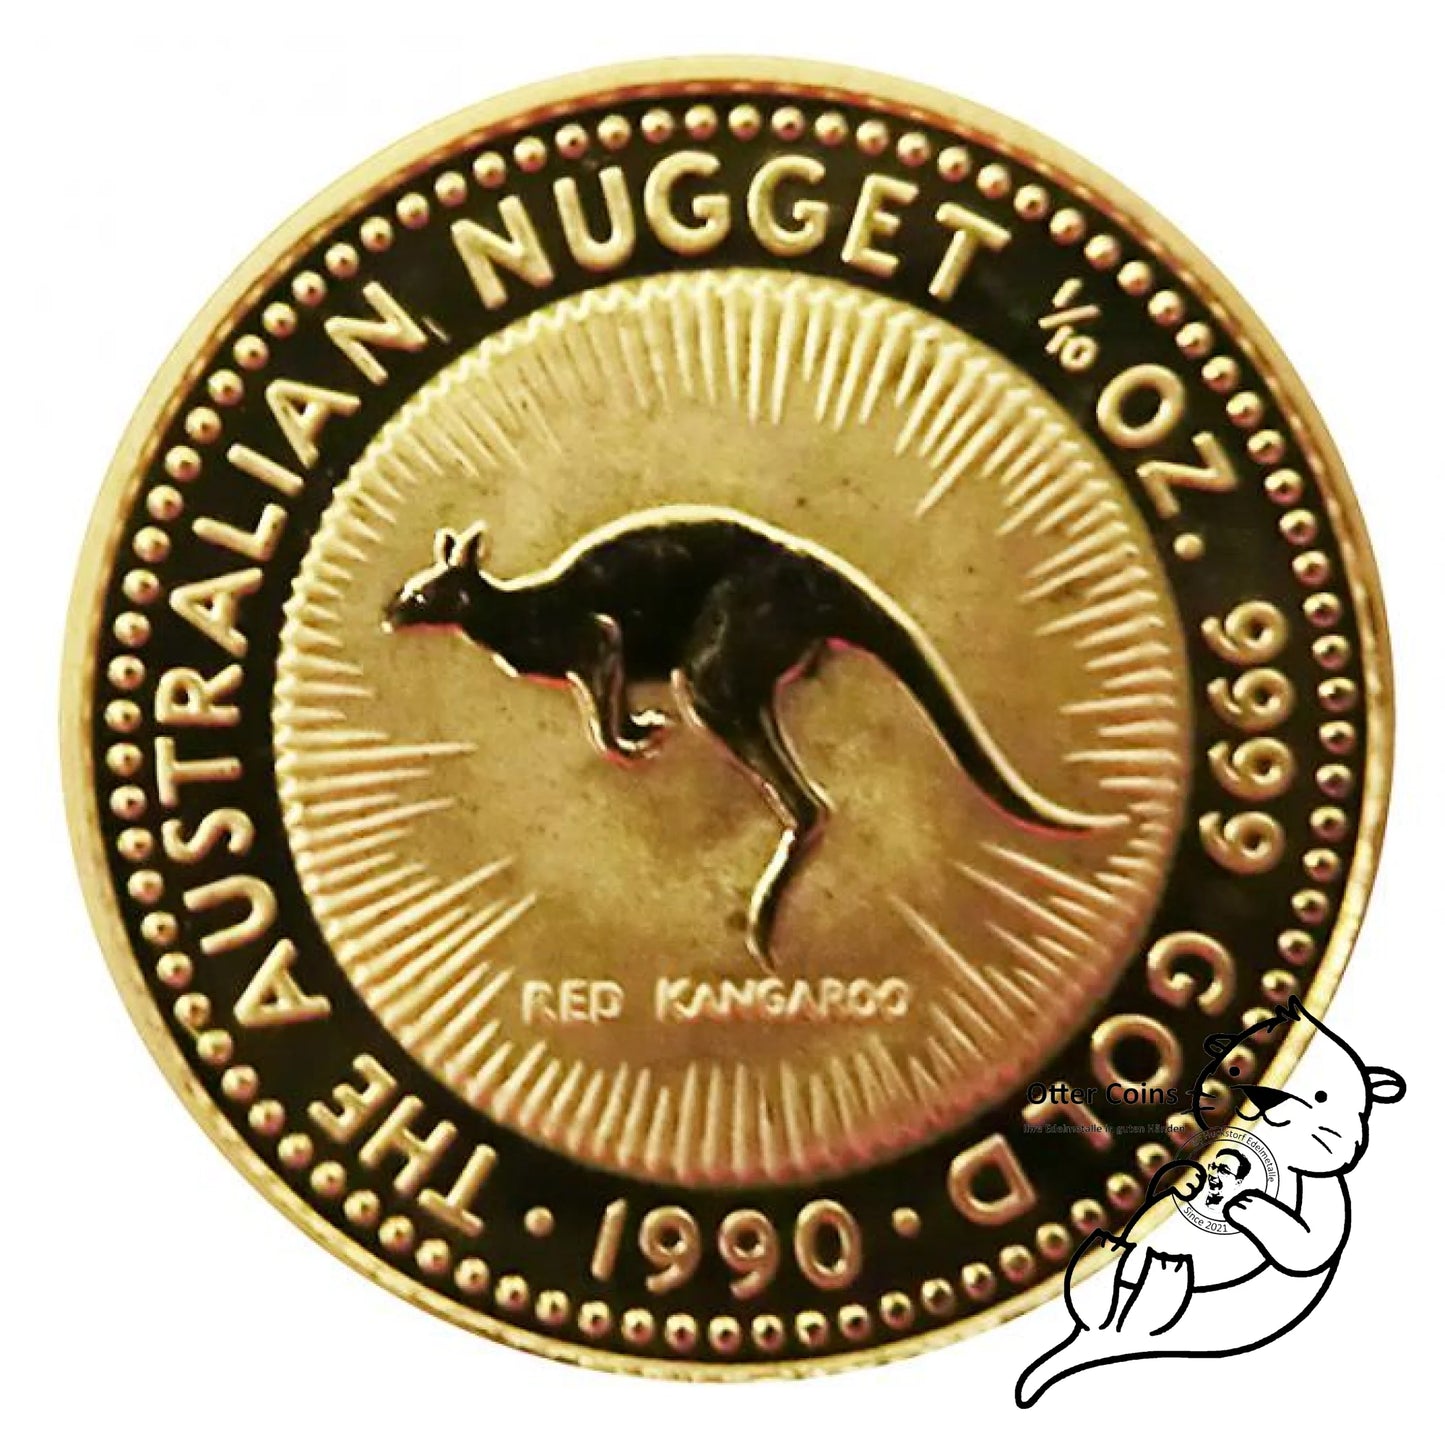 Australien Känguru 1990 1/10 Oz Gold**